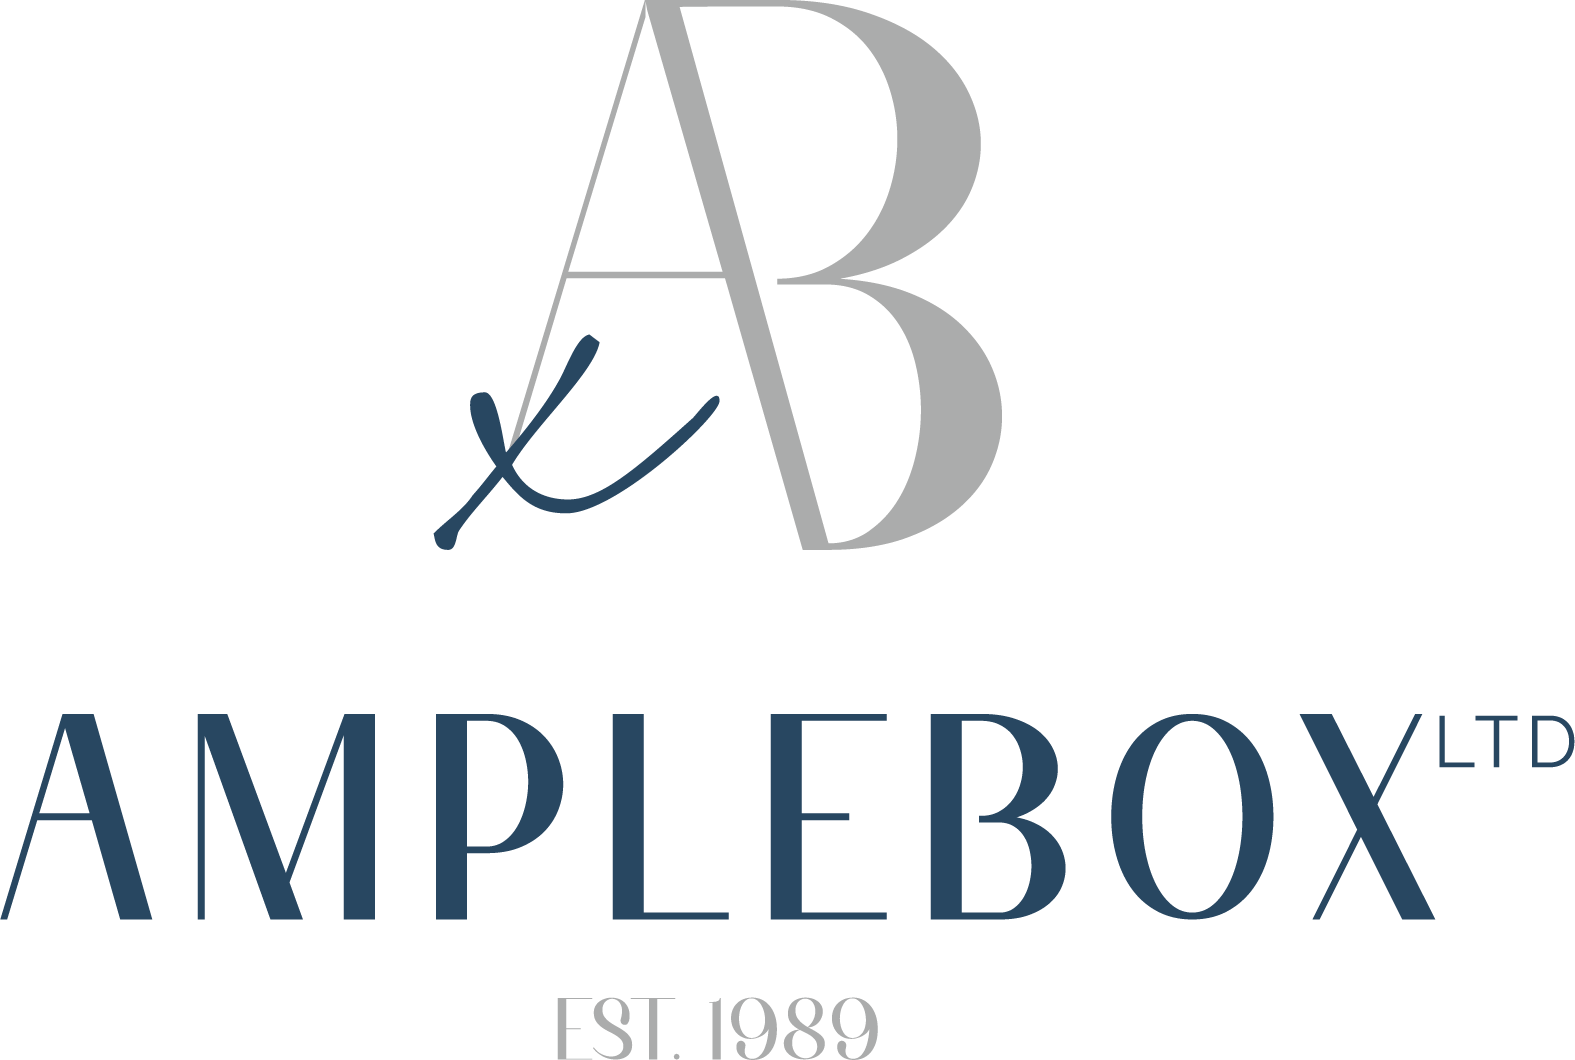 Amplebox Ltd